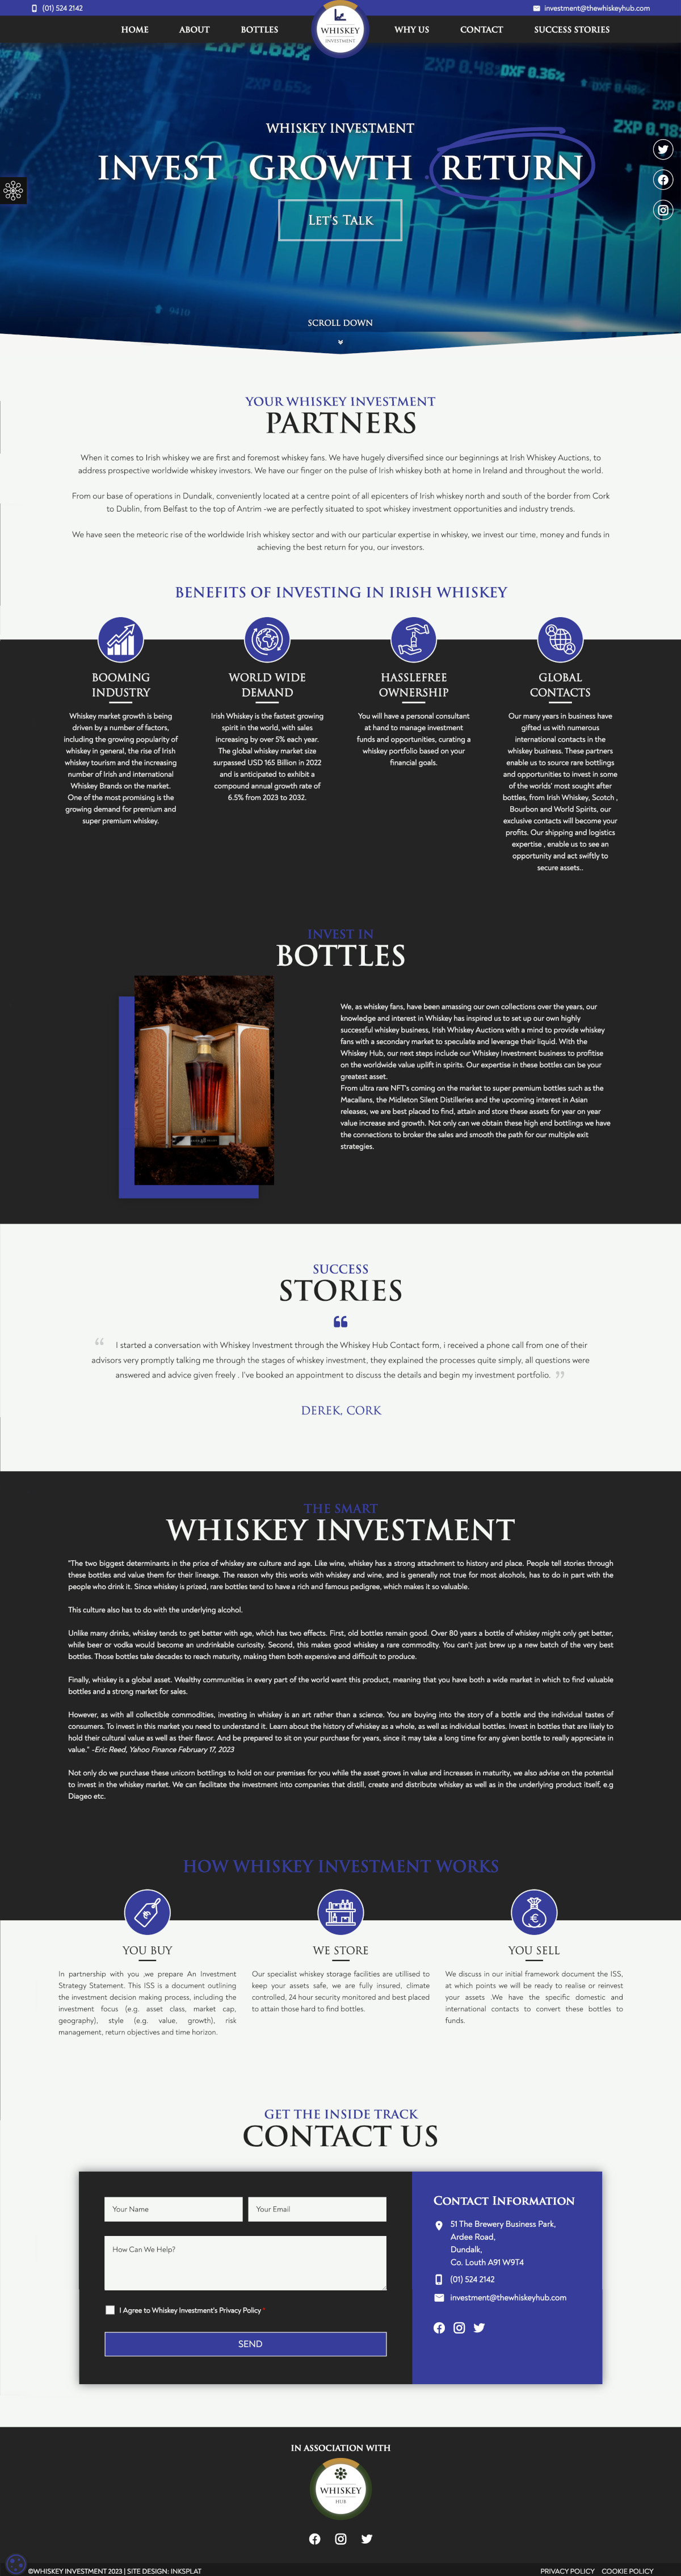 Whiskey Investment web design